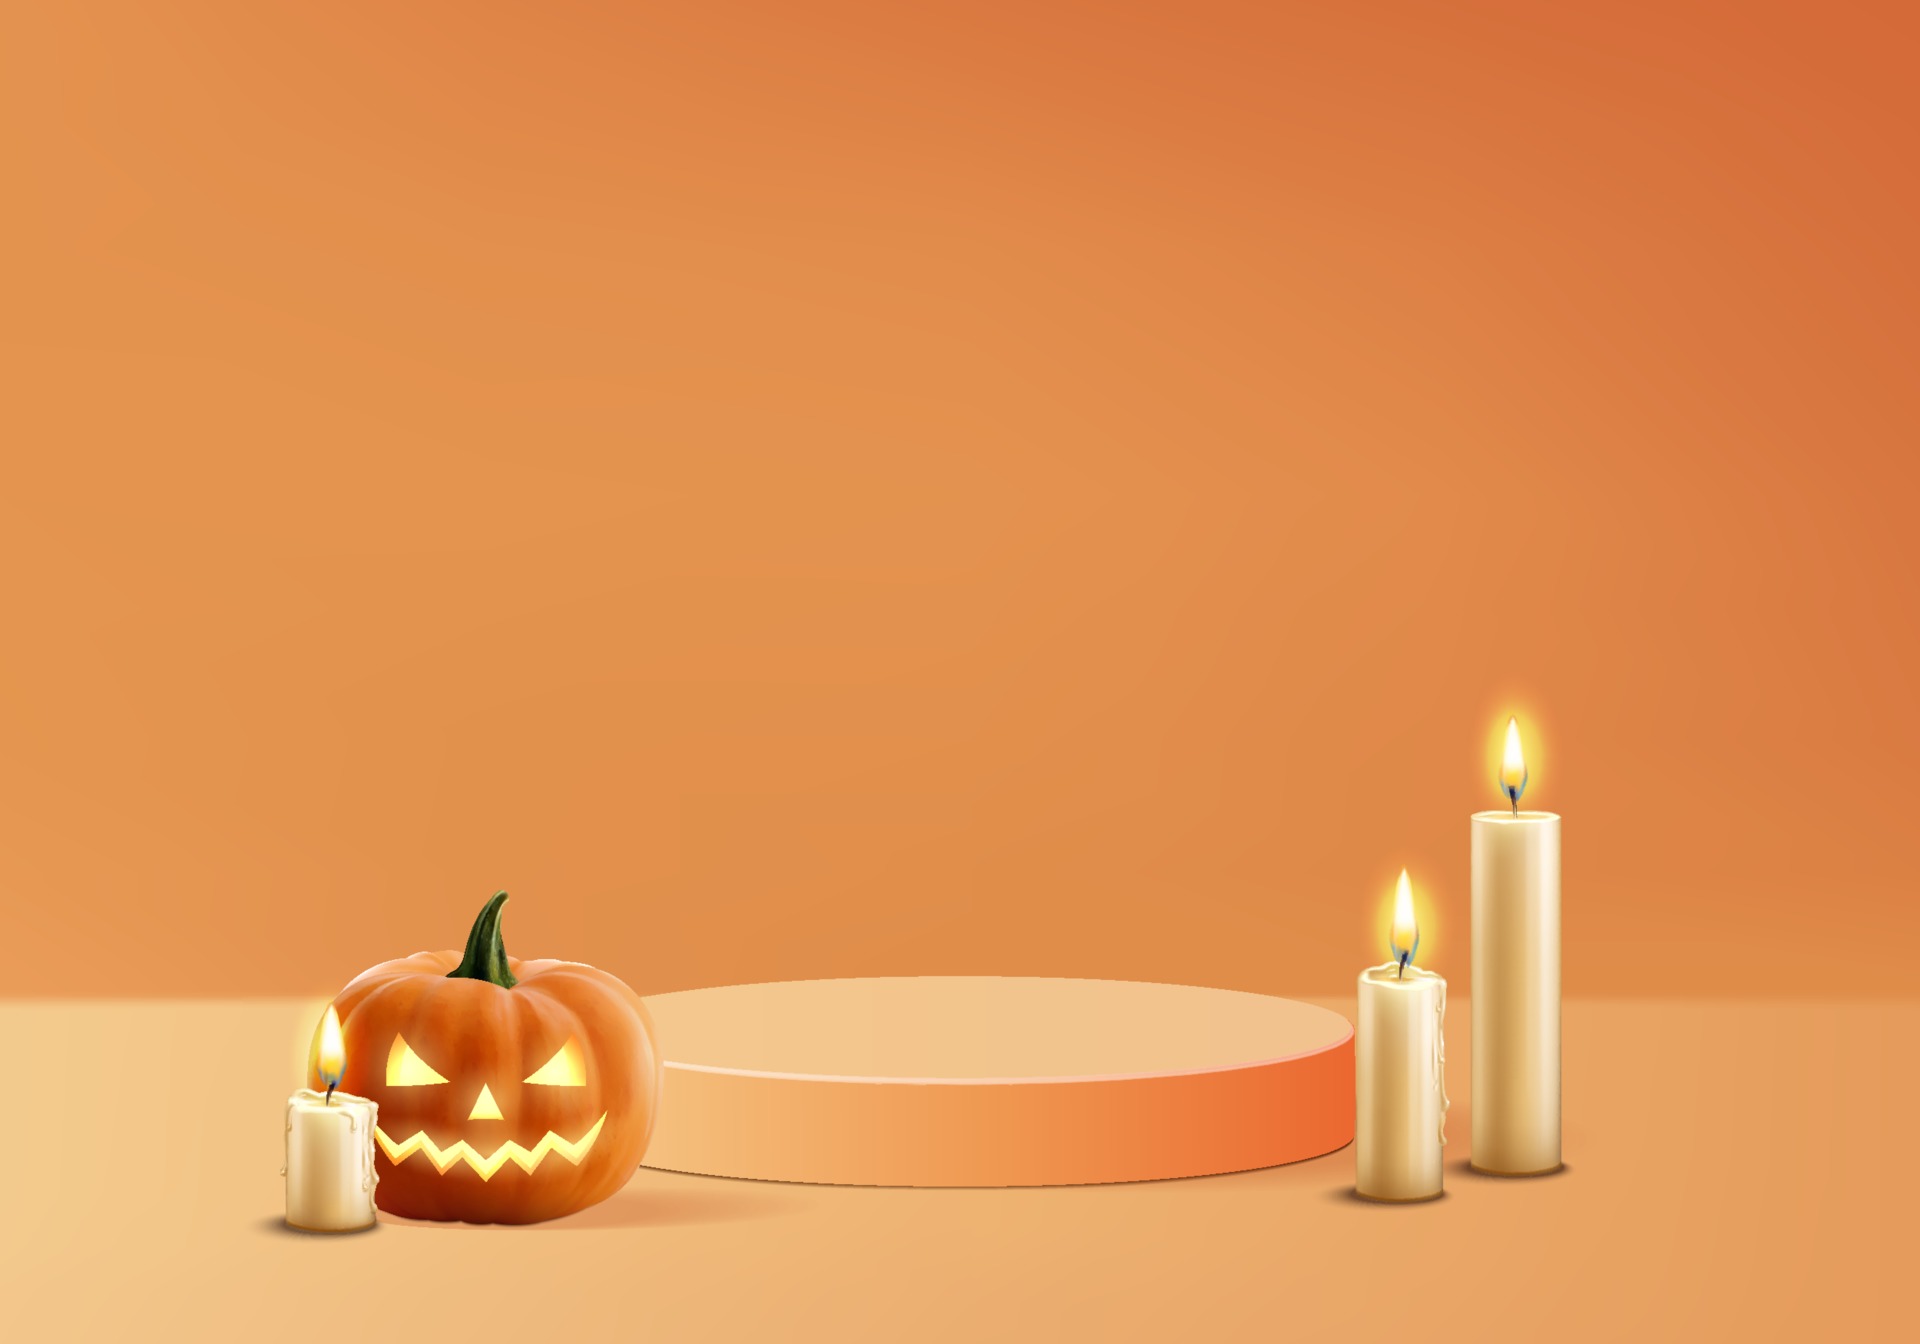 Cute Halloween Live Wallpaper  Apps on Google Play